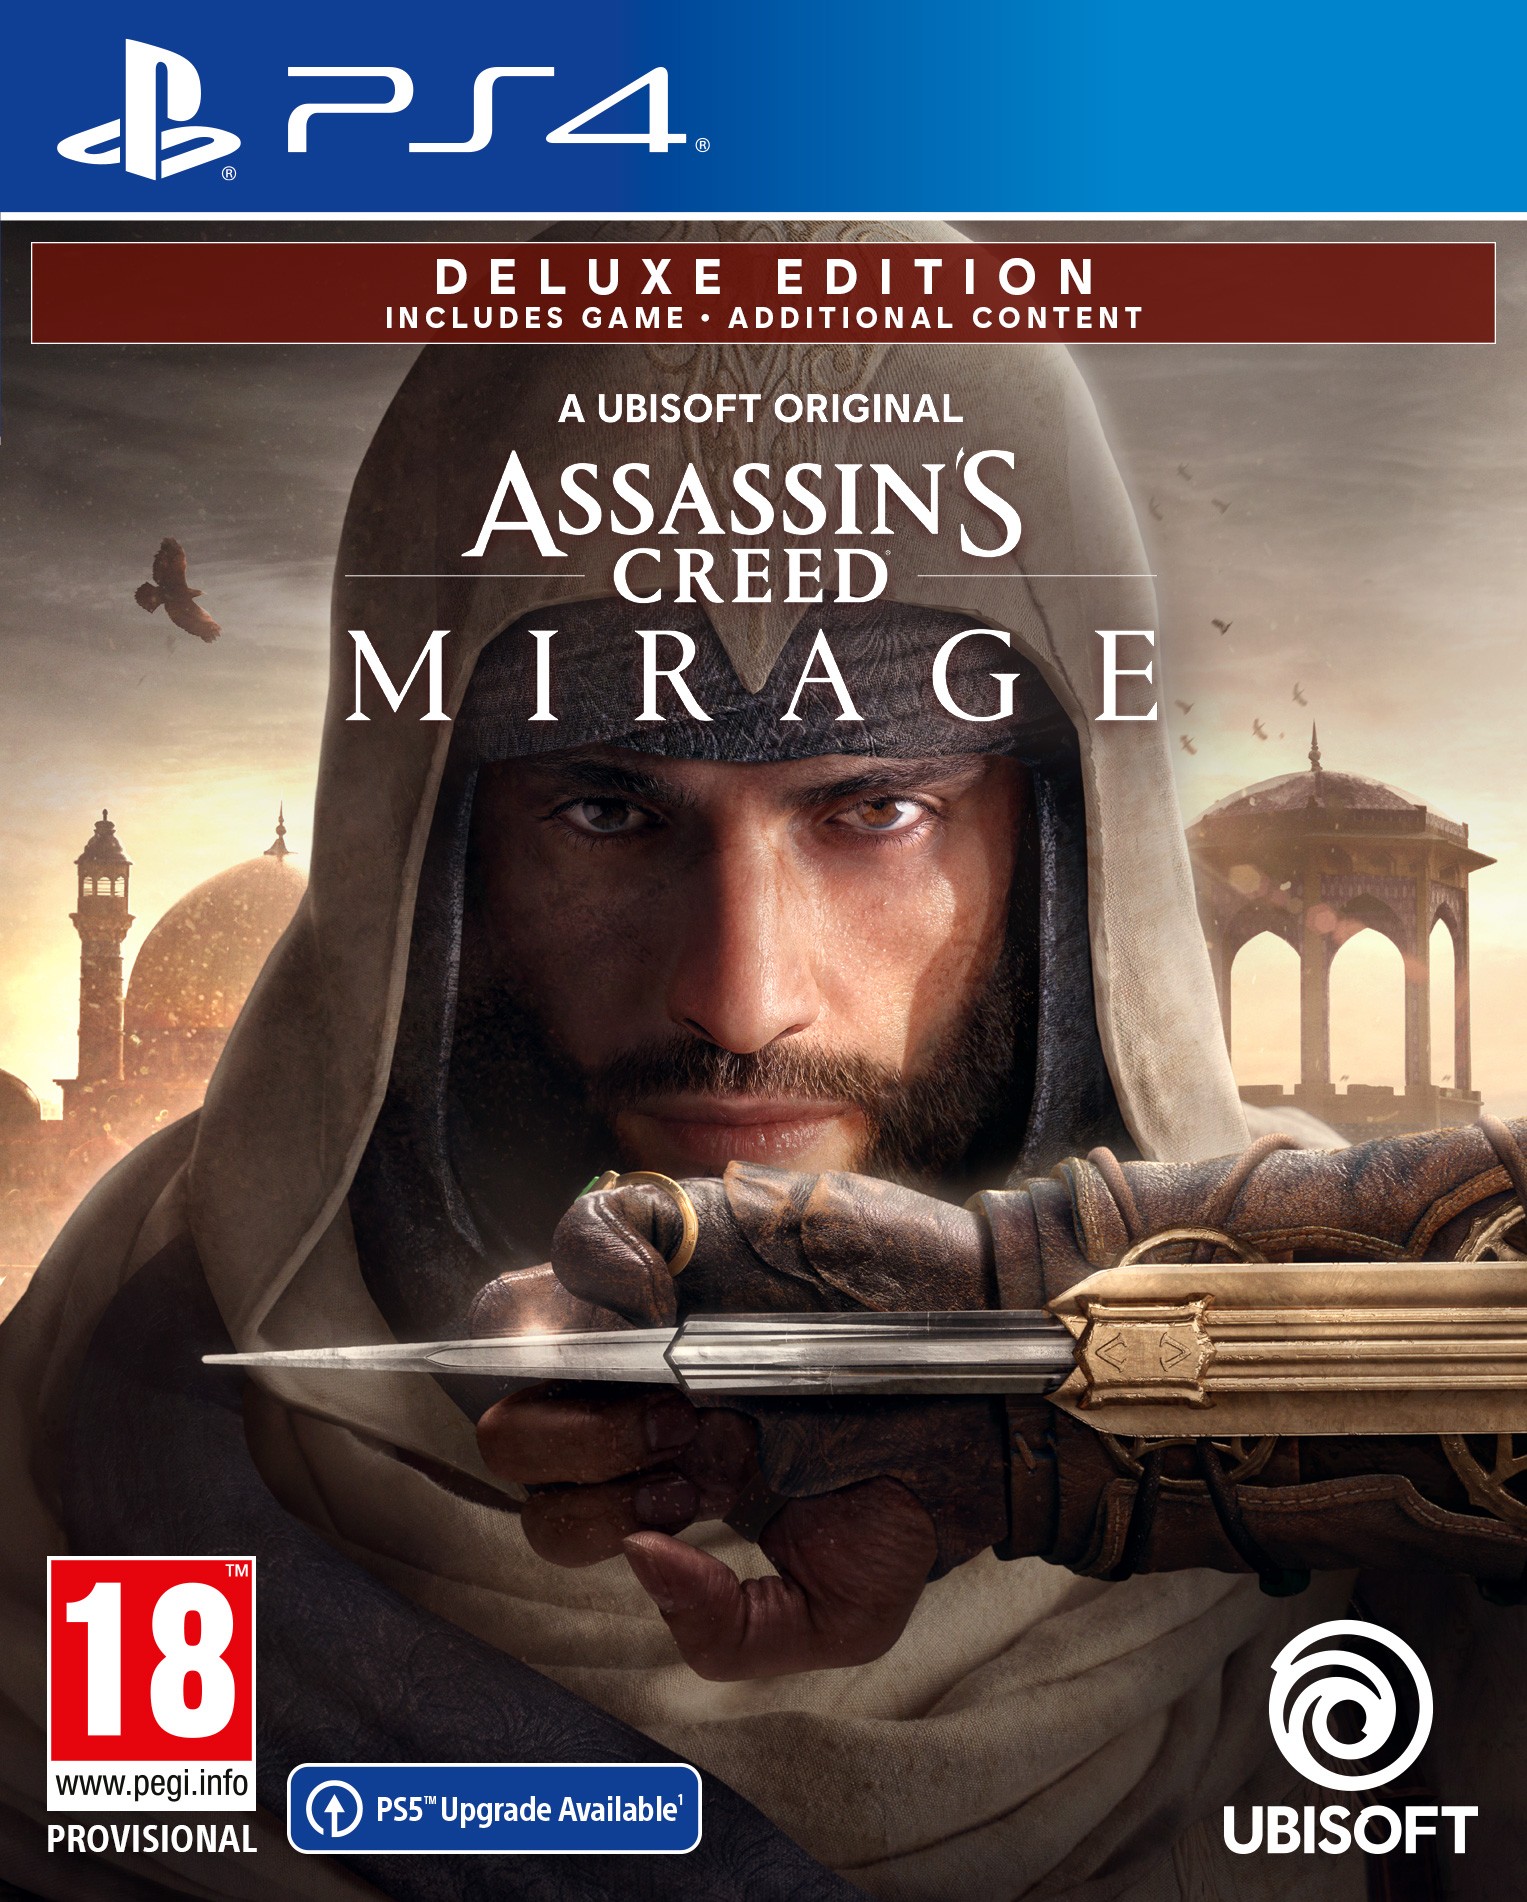 Assassin's Creed Mirage Deluxe Edition + Preorder Bonus